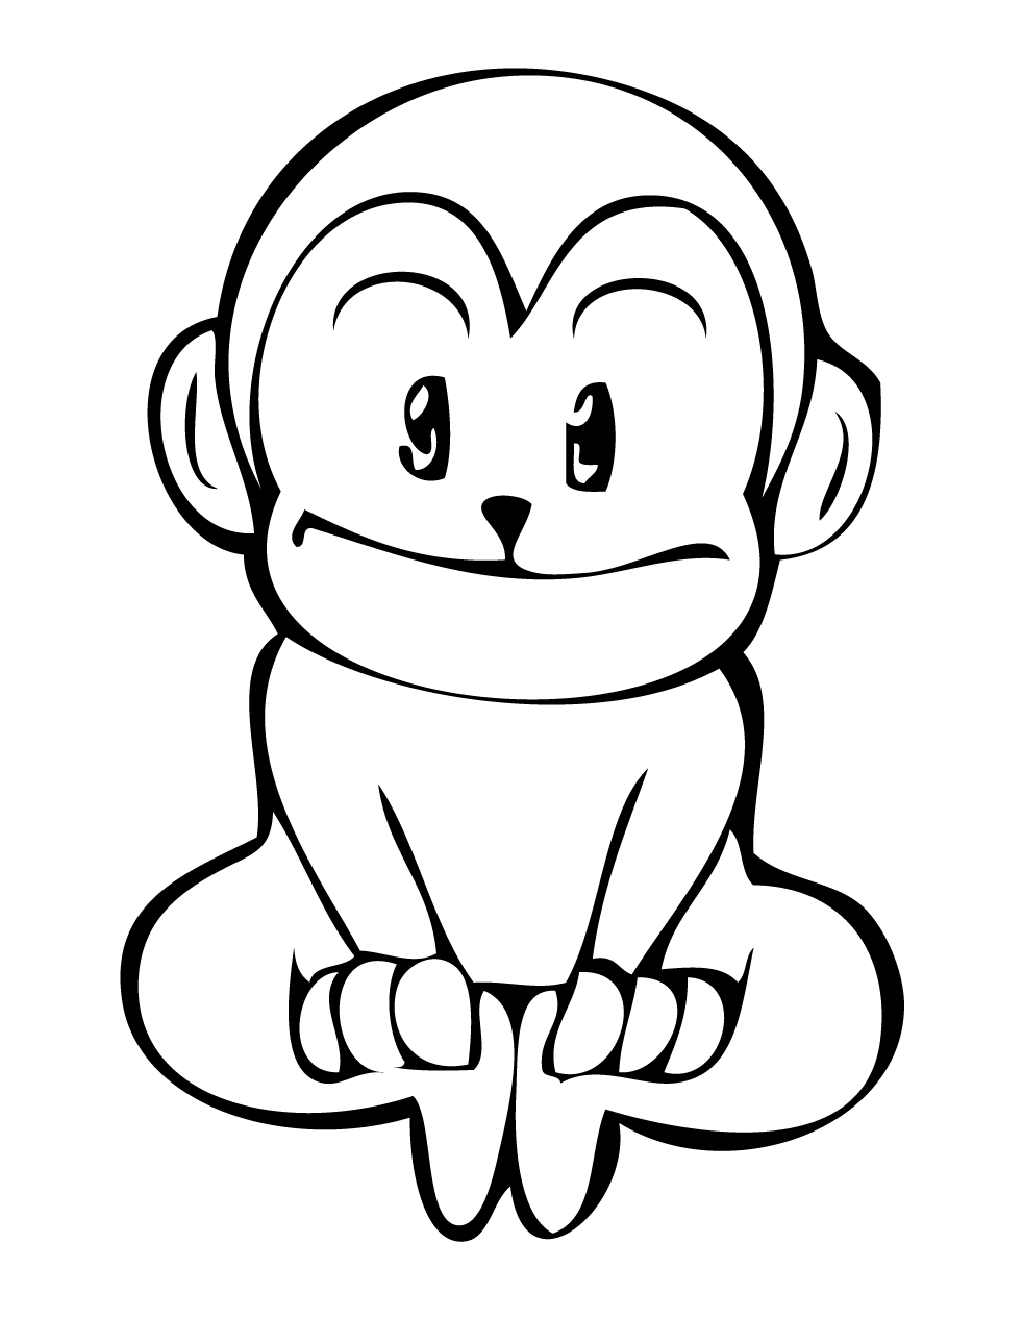 hugo l'escargot coloriage à dessiner singe